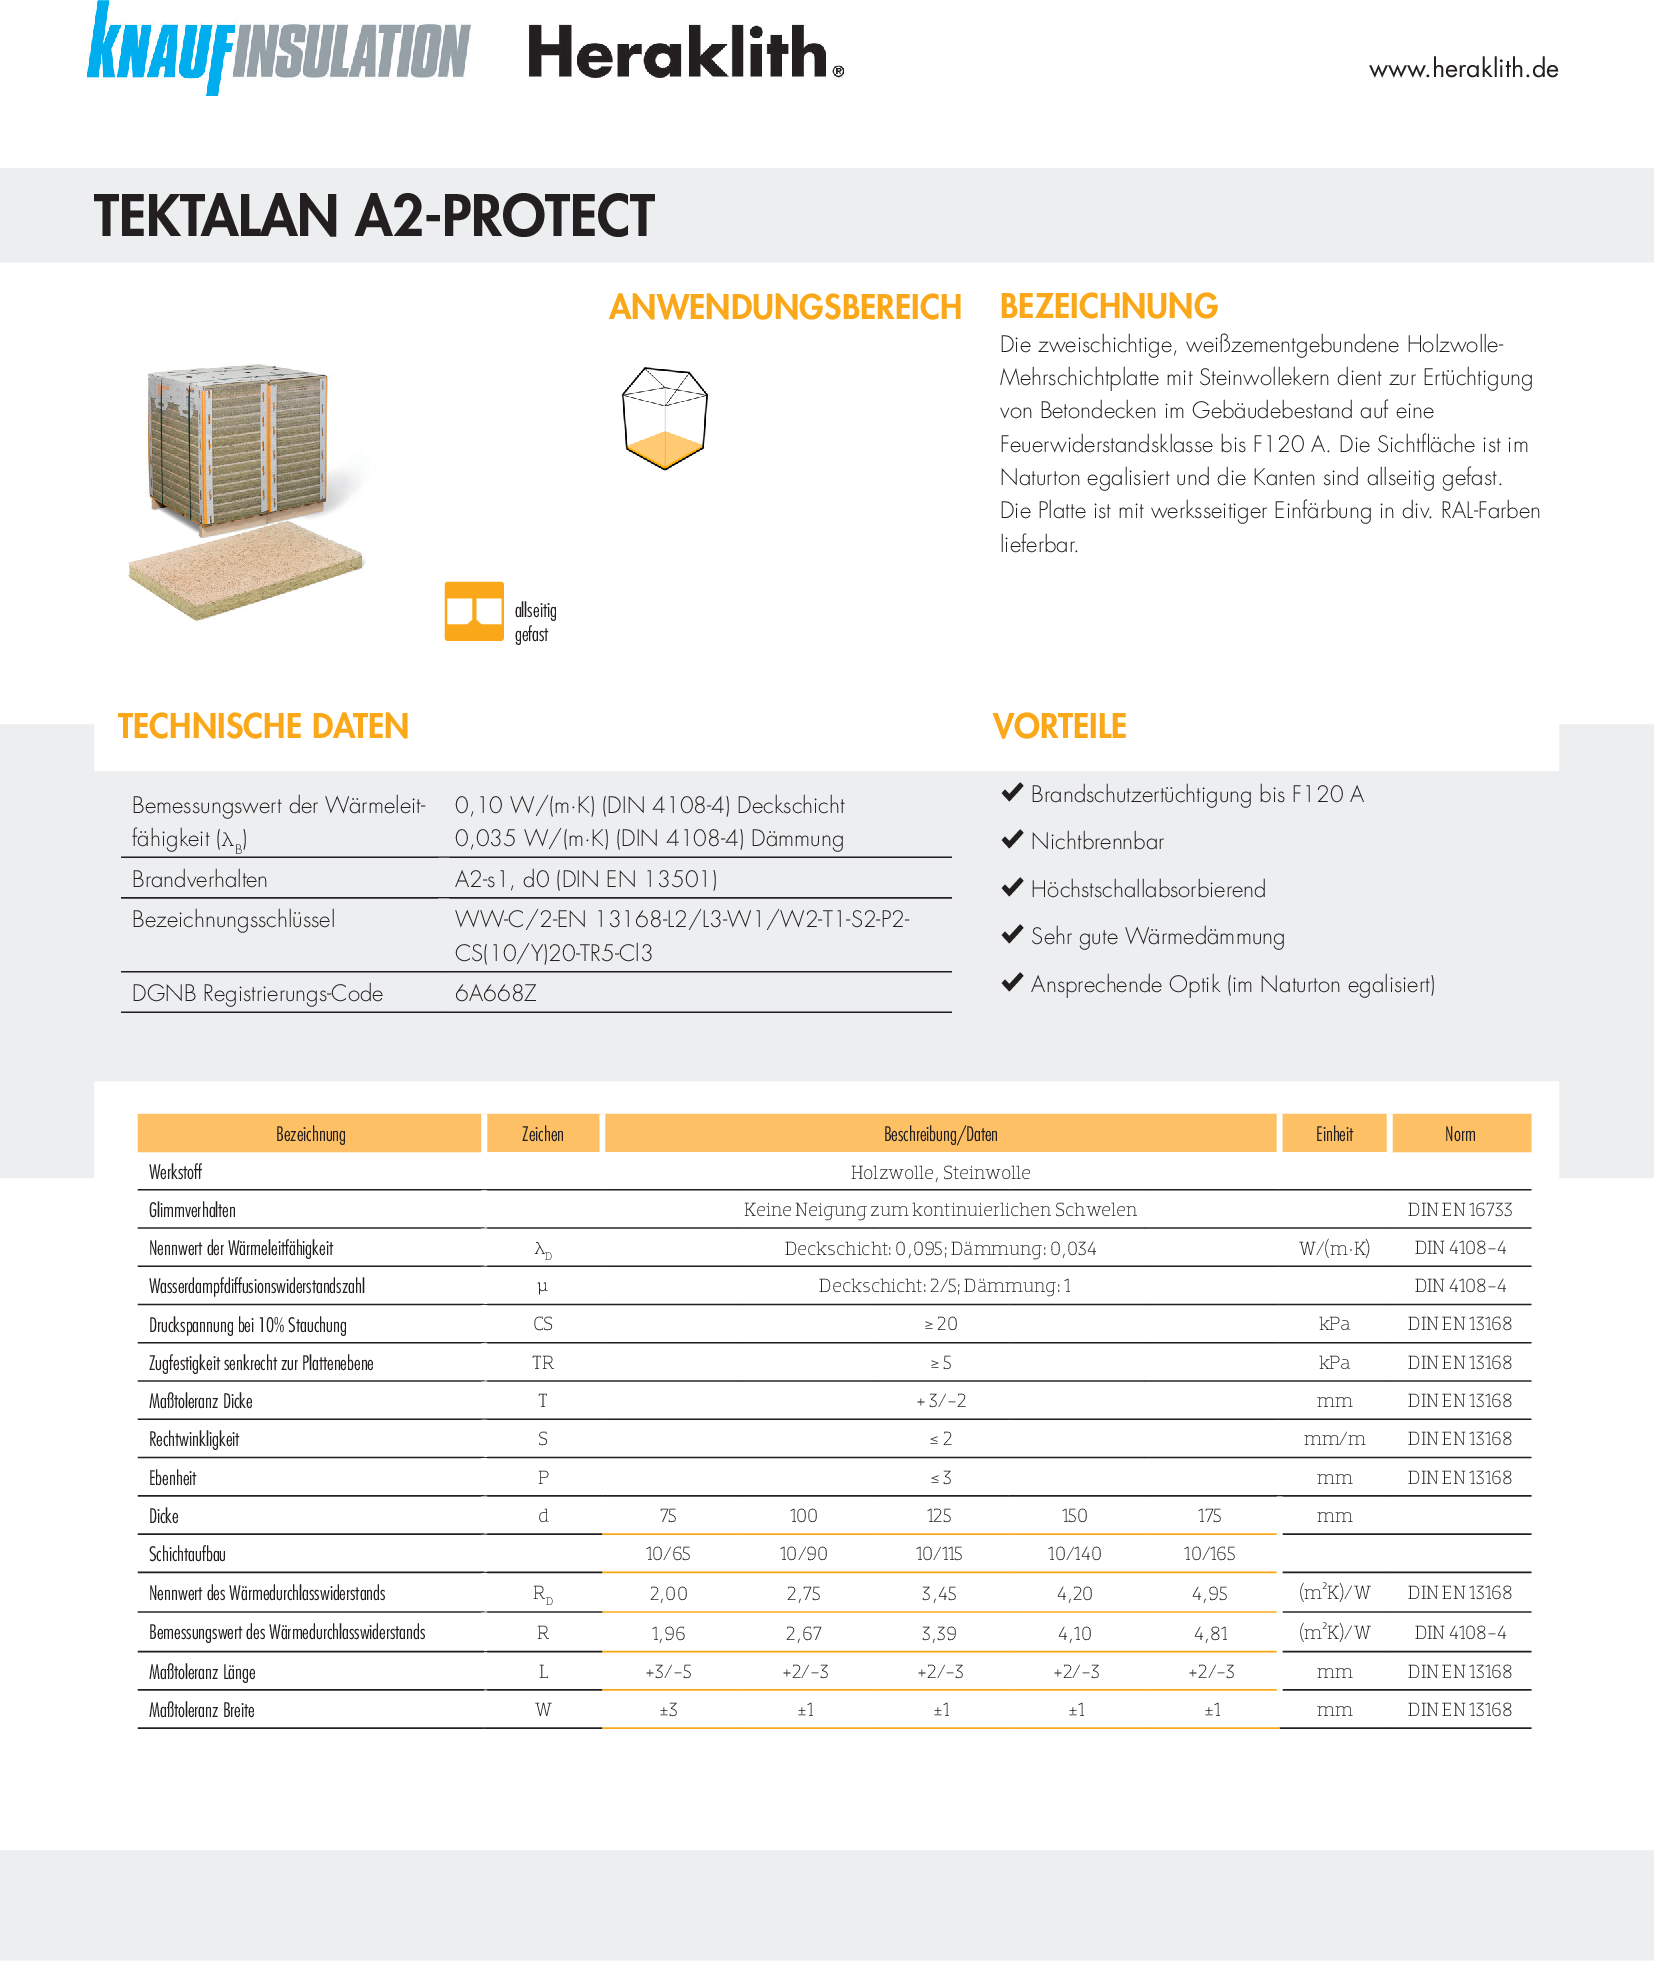 Datenblatt Tektalan A2-Protect